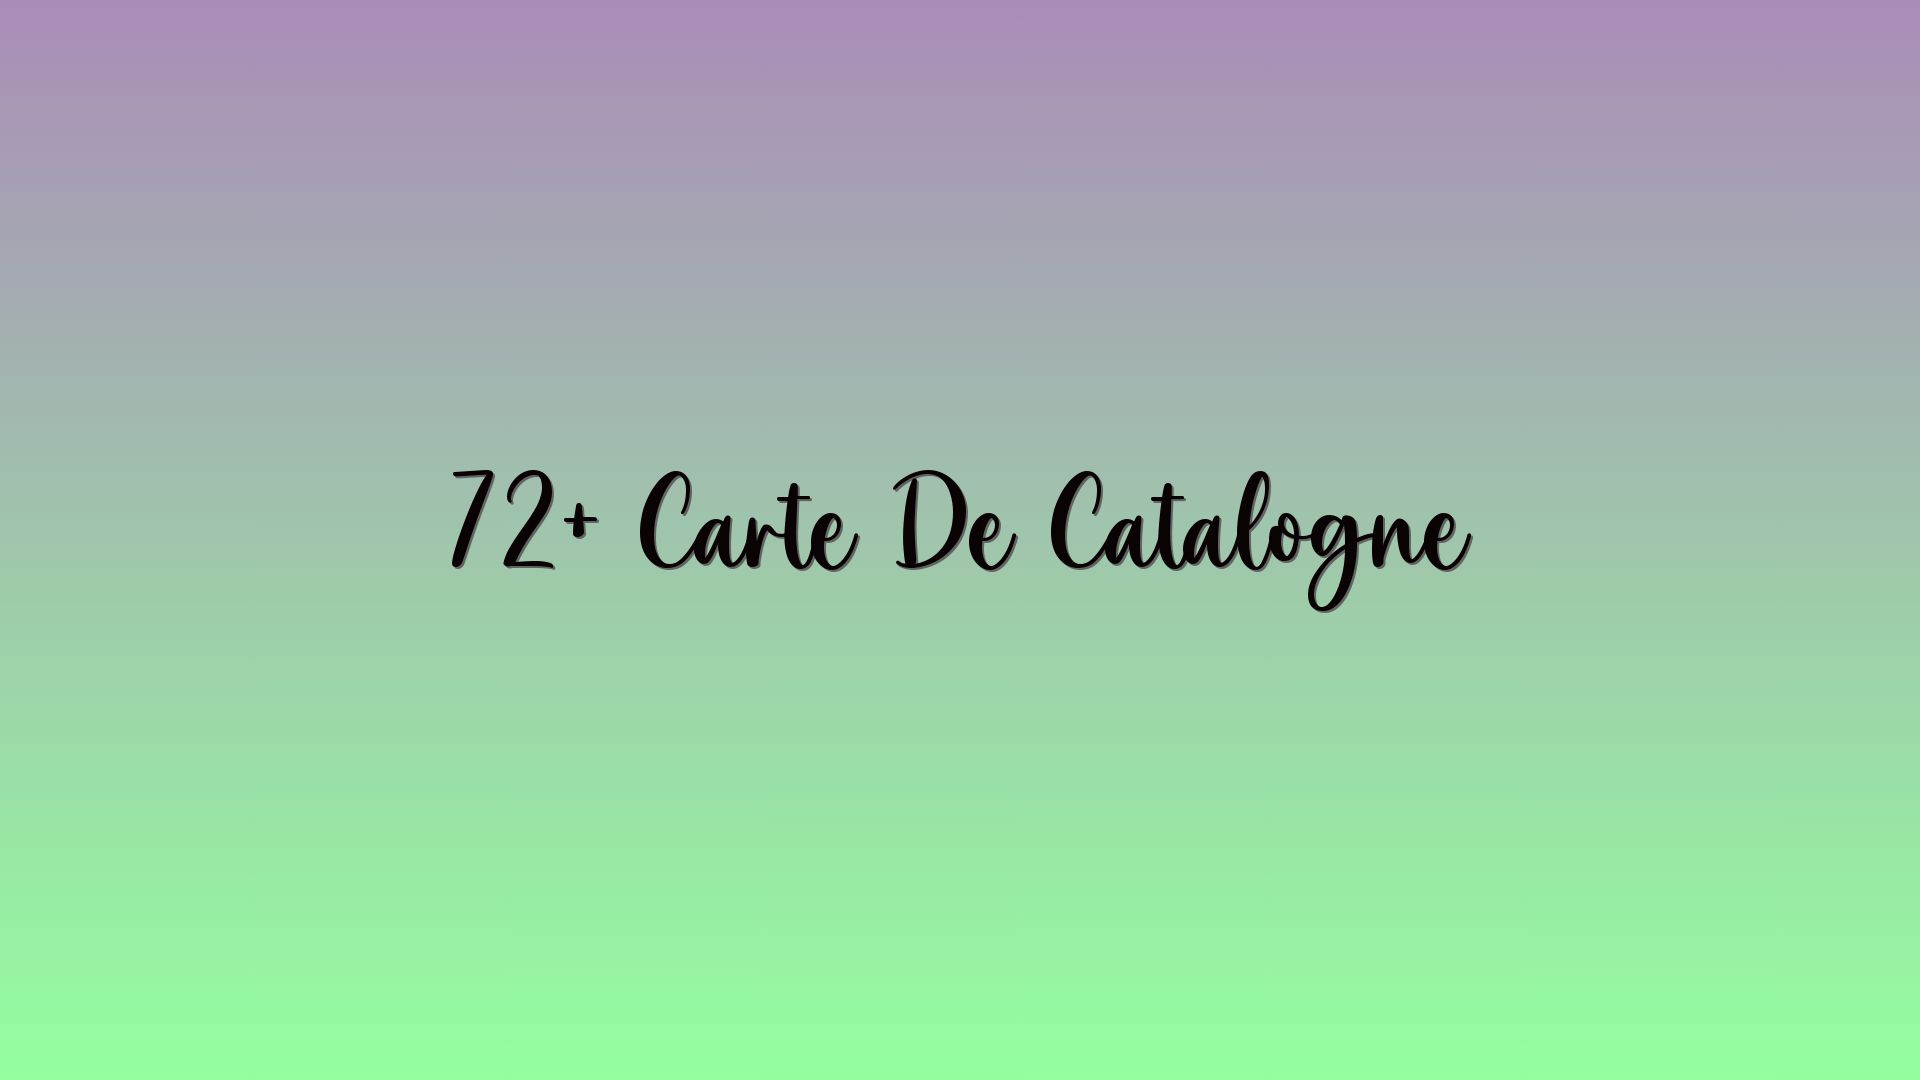 72+ Carte De Catalogne